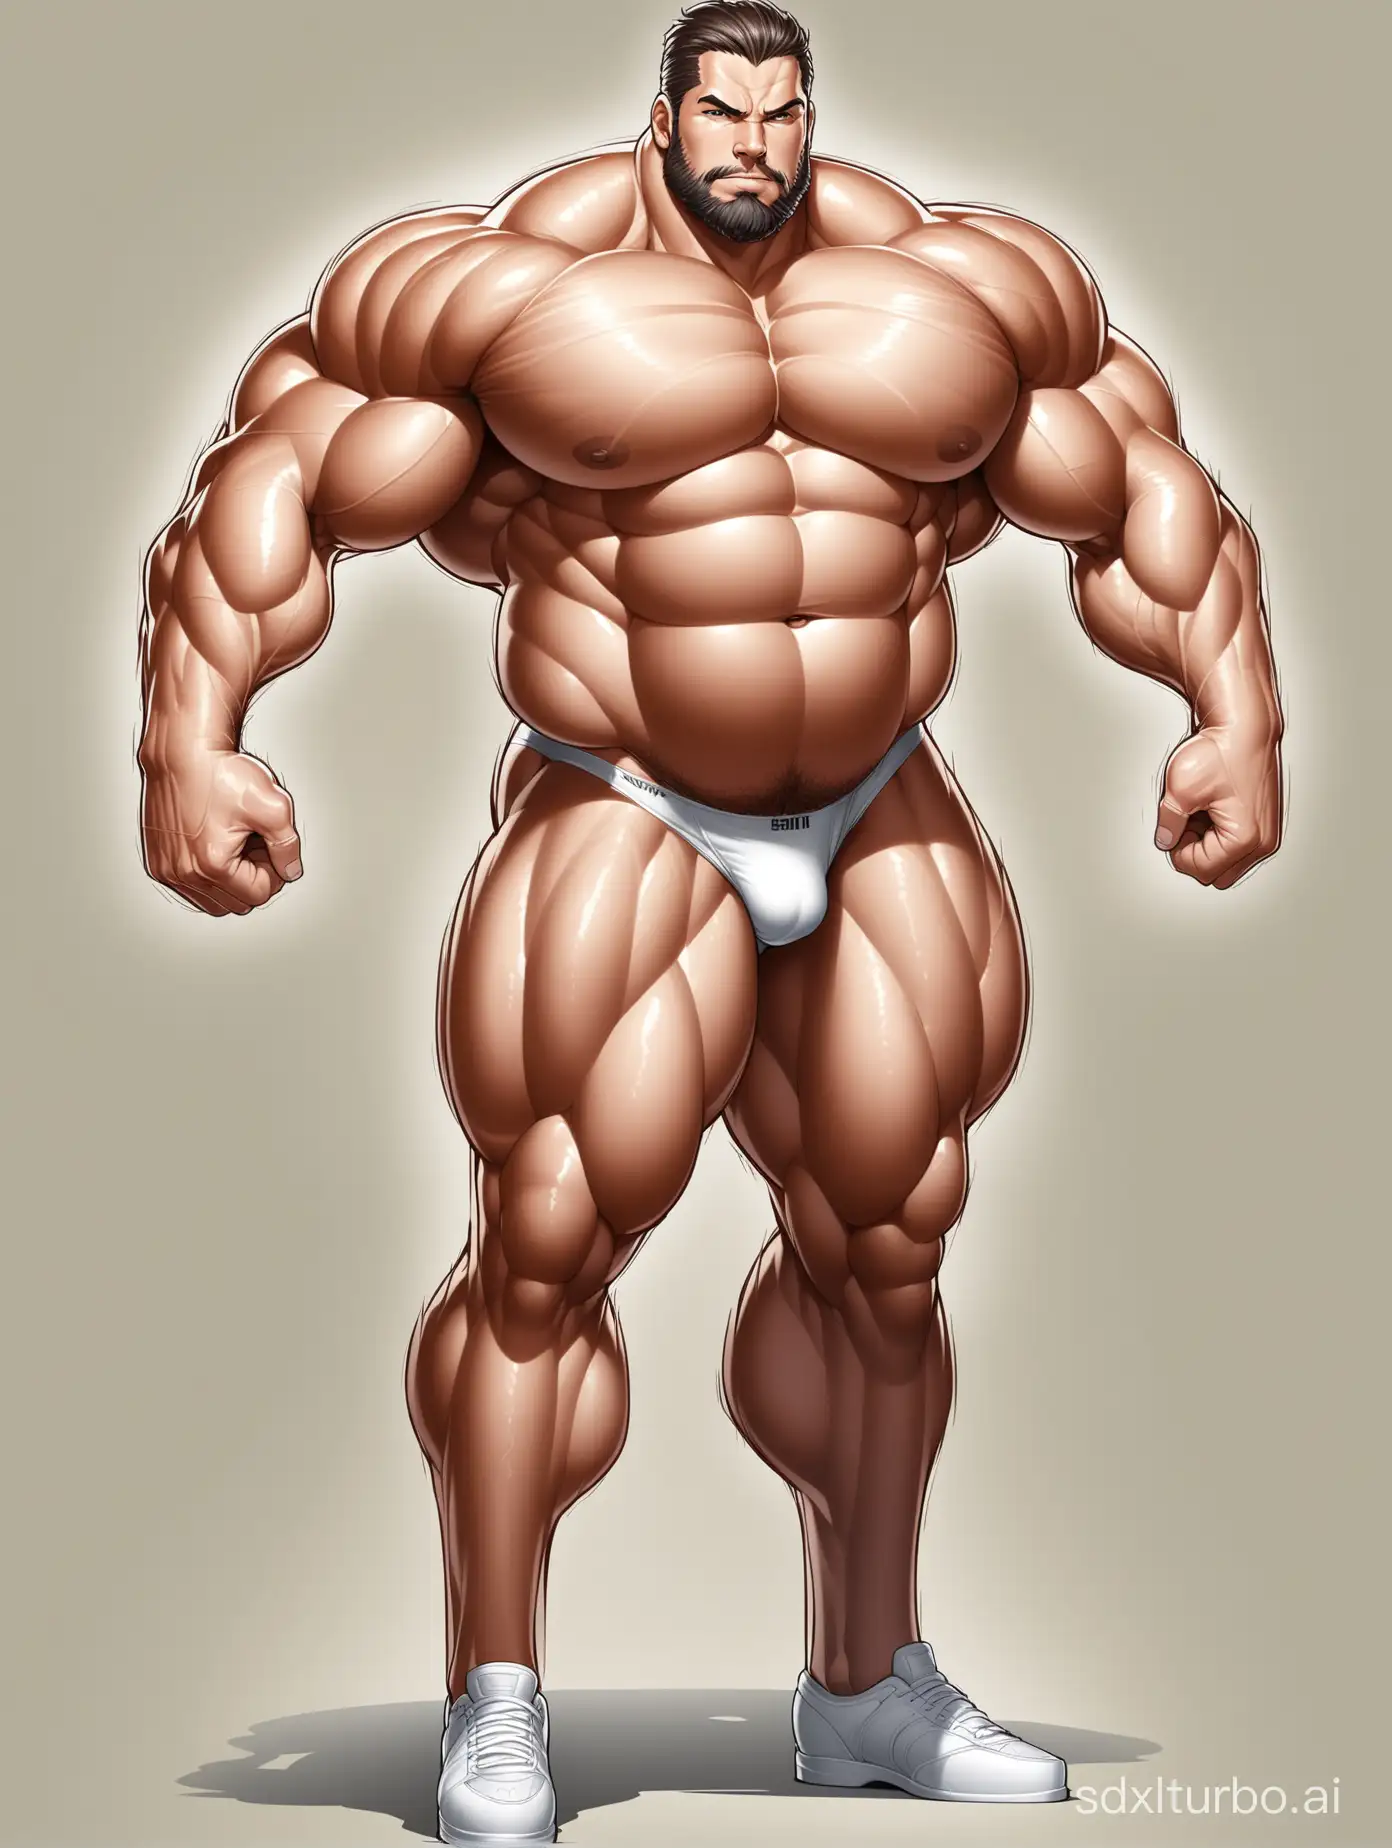 Massive-Muscle-Stud-Showing-Off-Huge-Biceps-in-White-Underwear